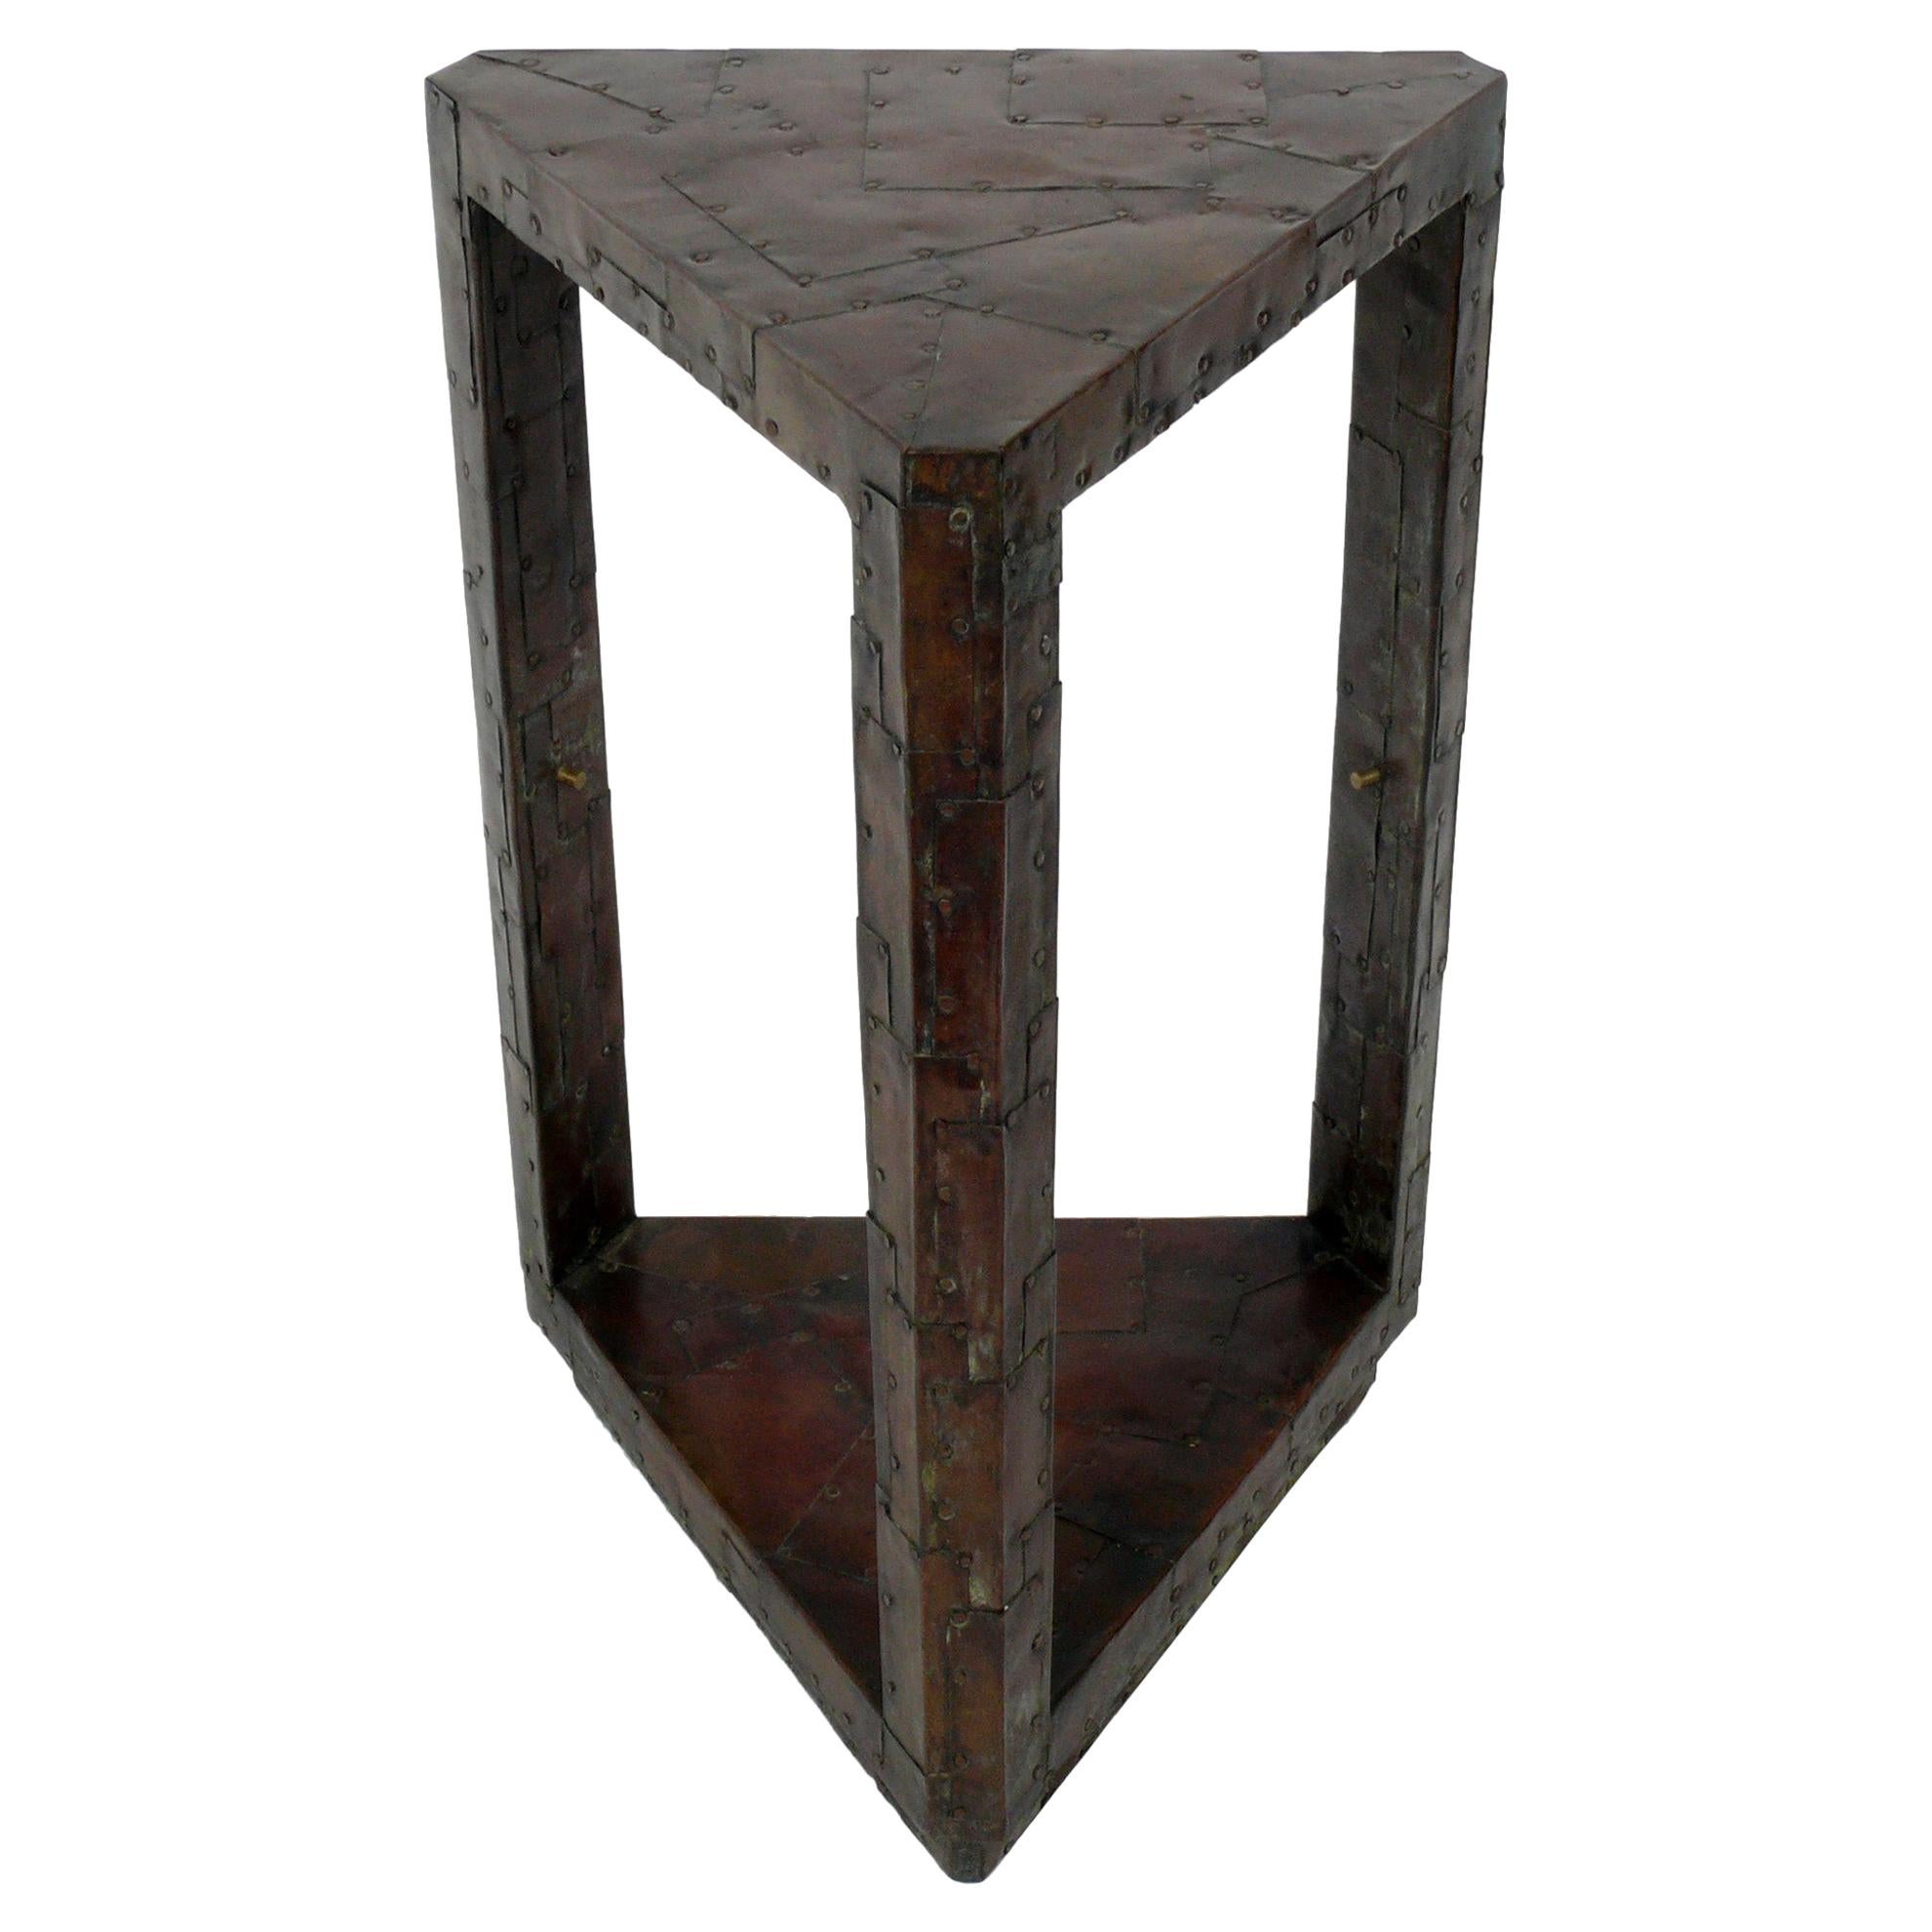 Copper Patchwork Table or Pedestal